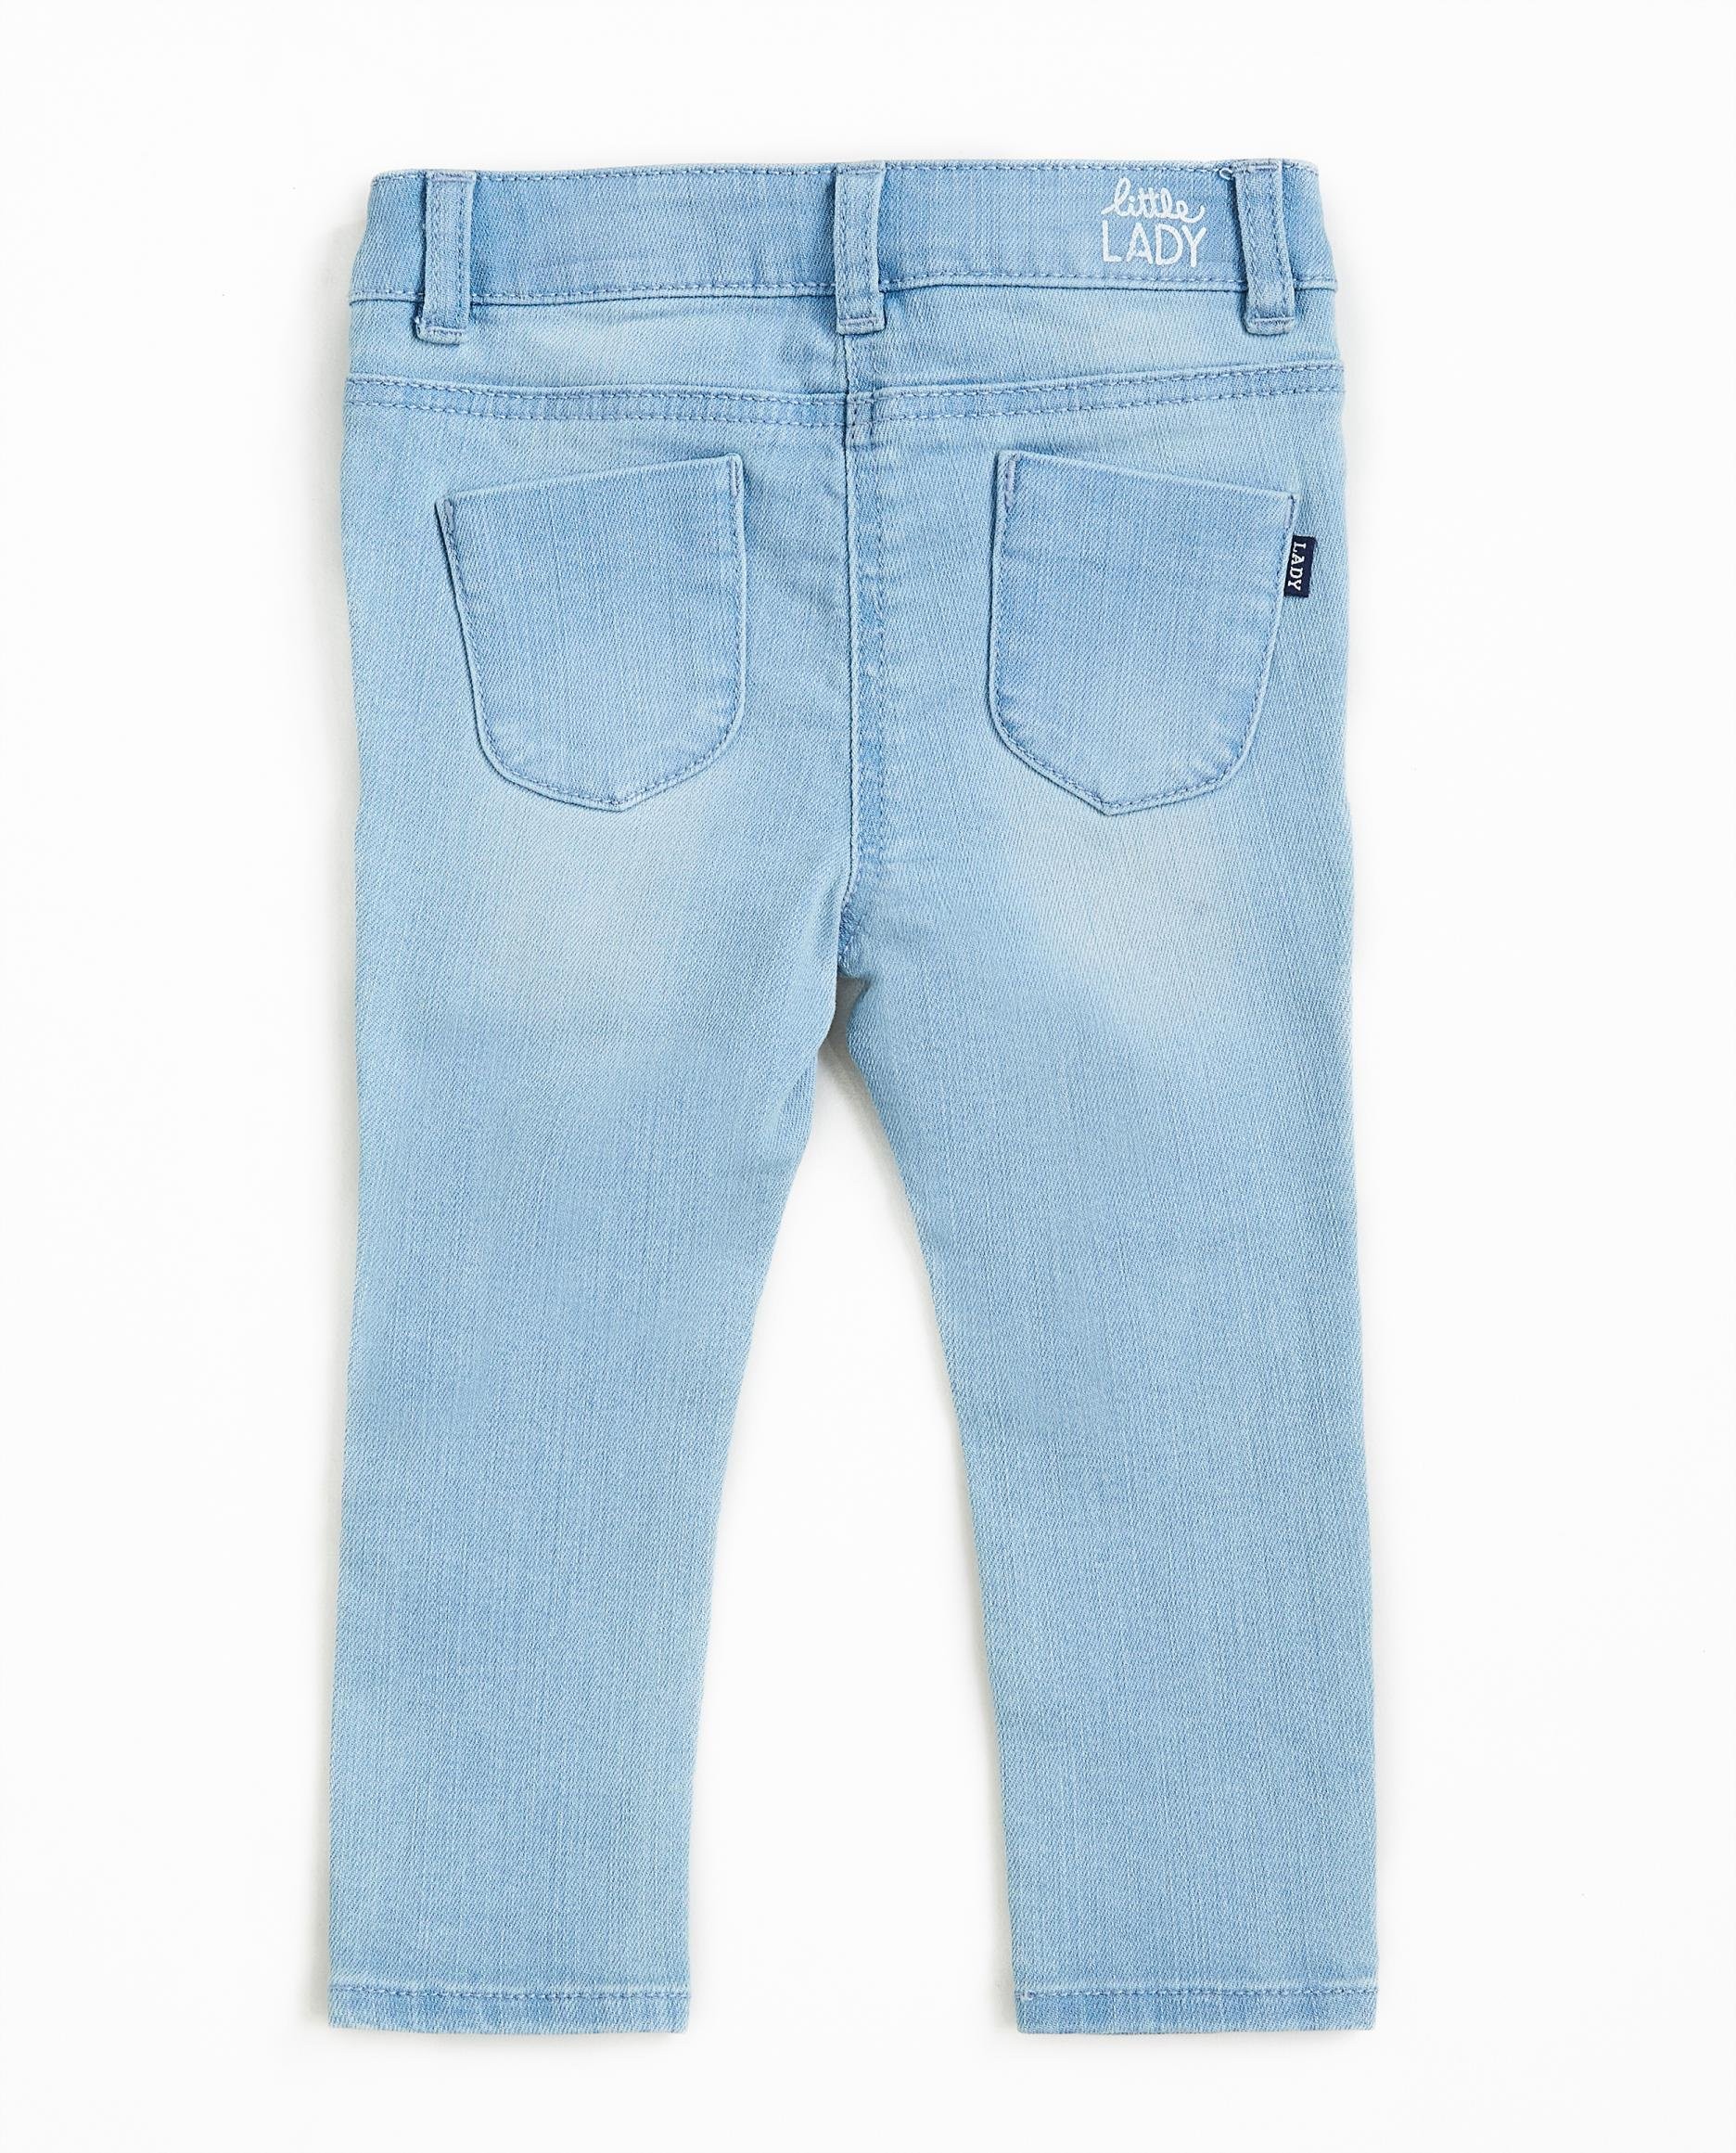 Jeans - Lichtblauwe jeans